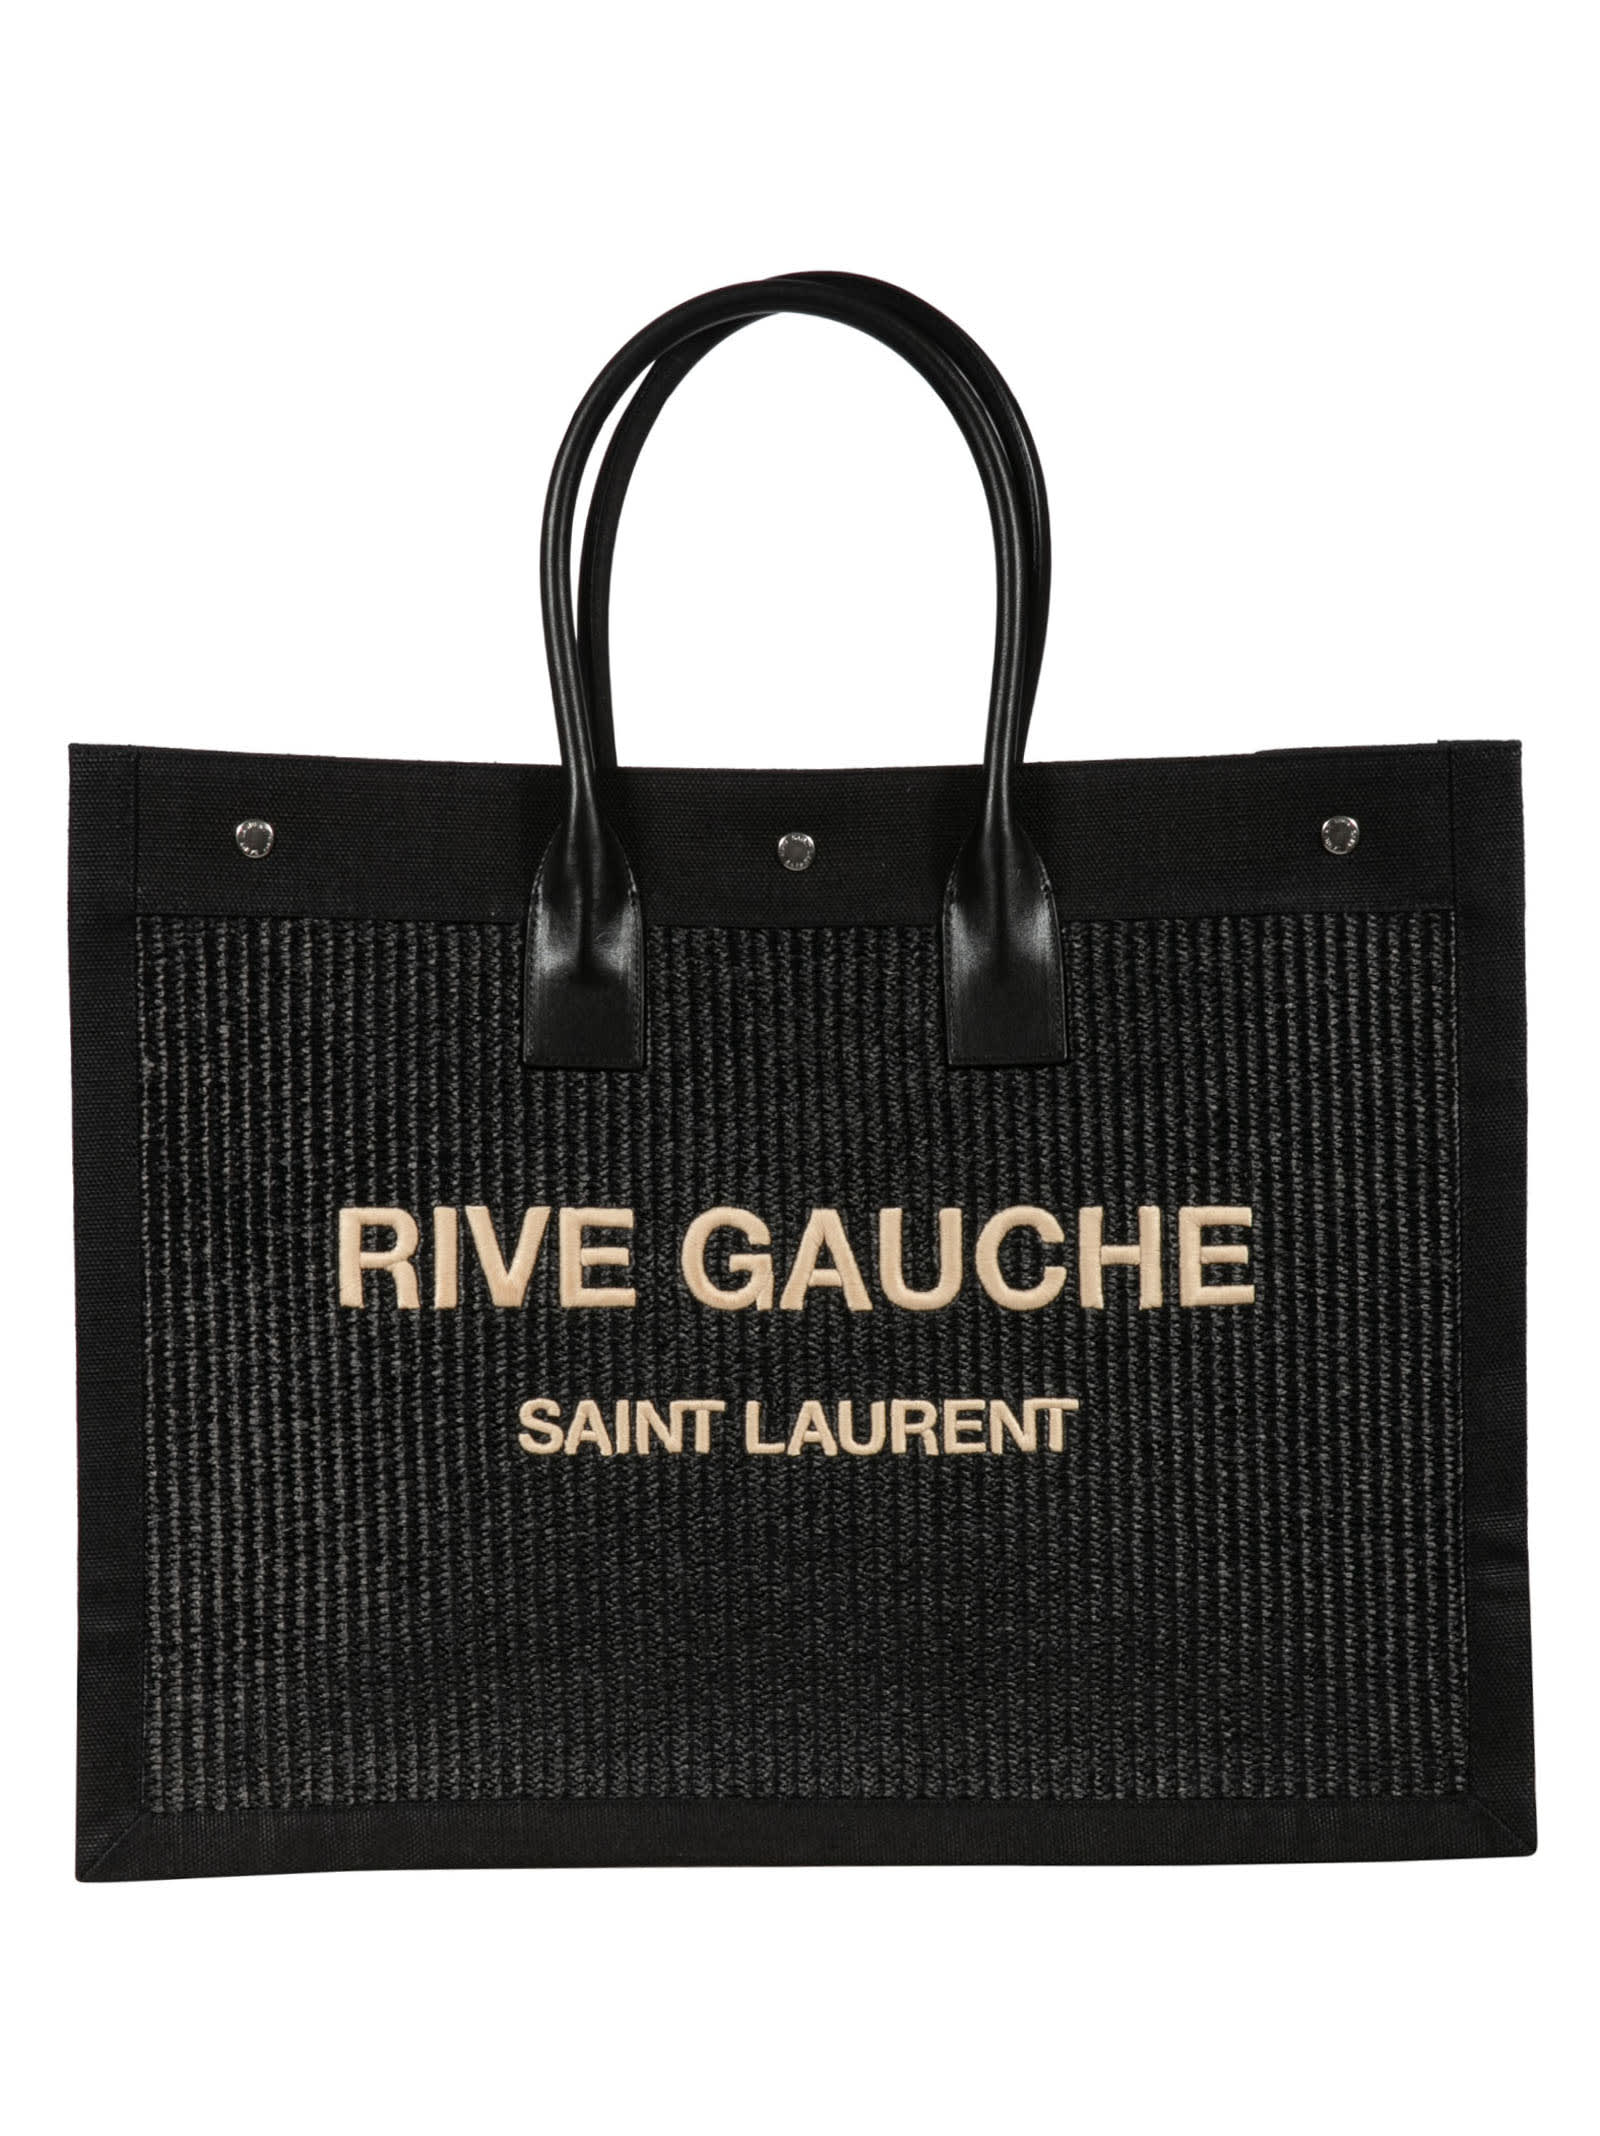 SAINT LAURENT RIVE GAUCHE TOTE,11878940